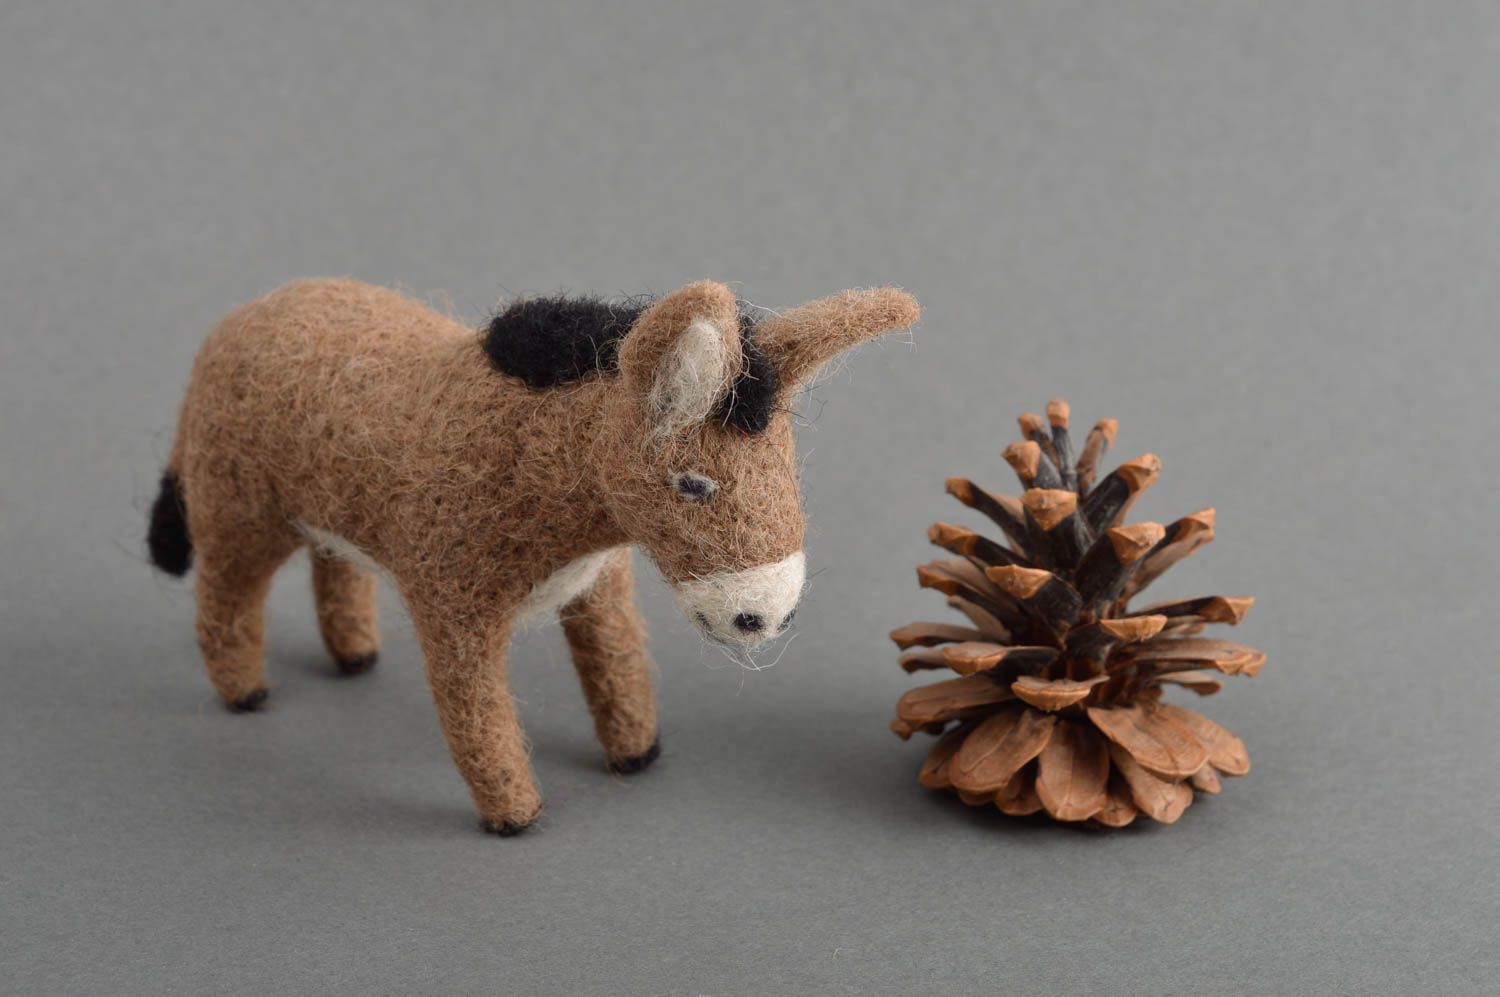 Handmade toy unusual toy woolen toy for kids interior decor ideas gift ideas photo 1